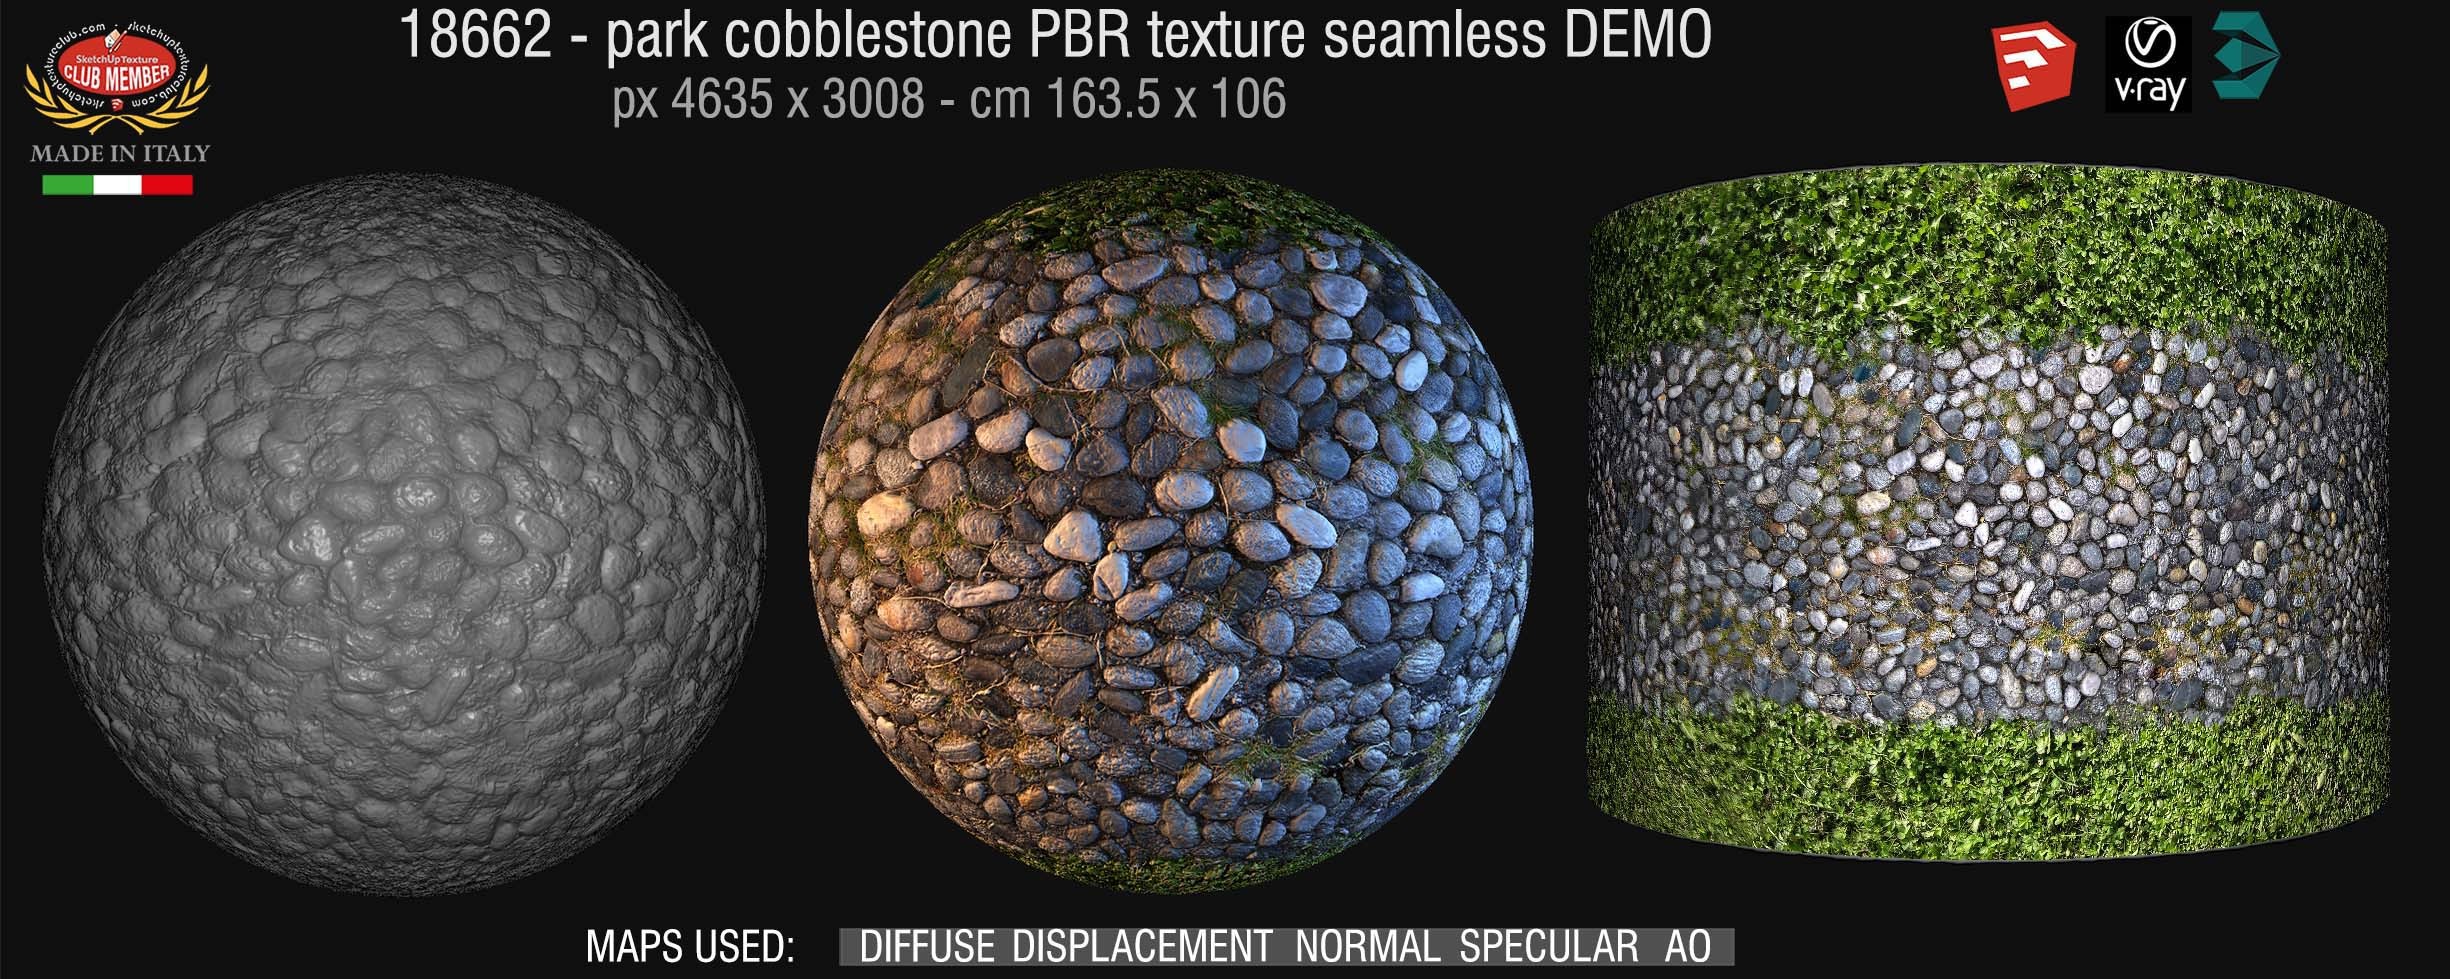 19662 park cobblestone paving PBR texture seamless DEMO